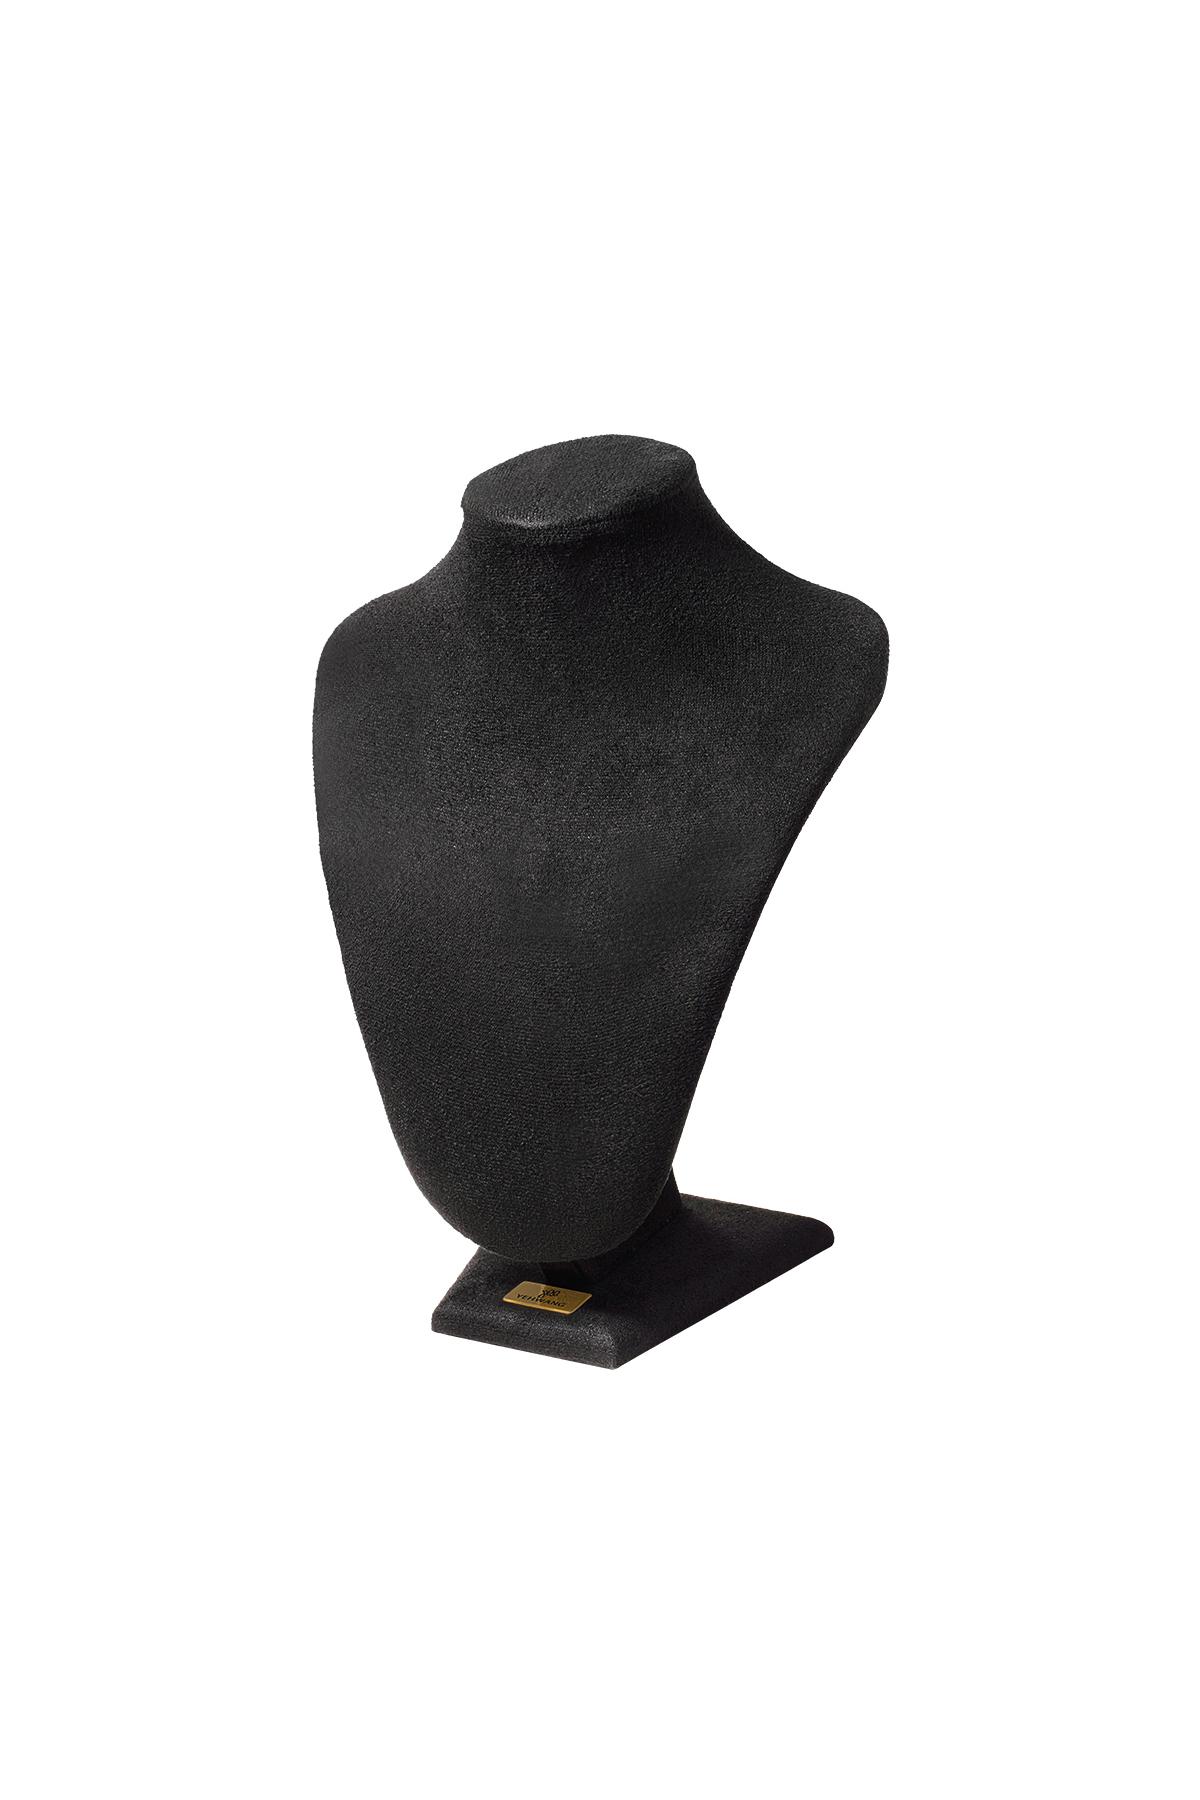 Necklace display bust Black Nylon h5 